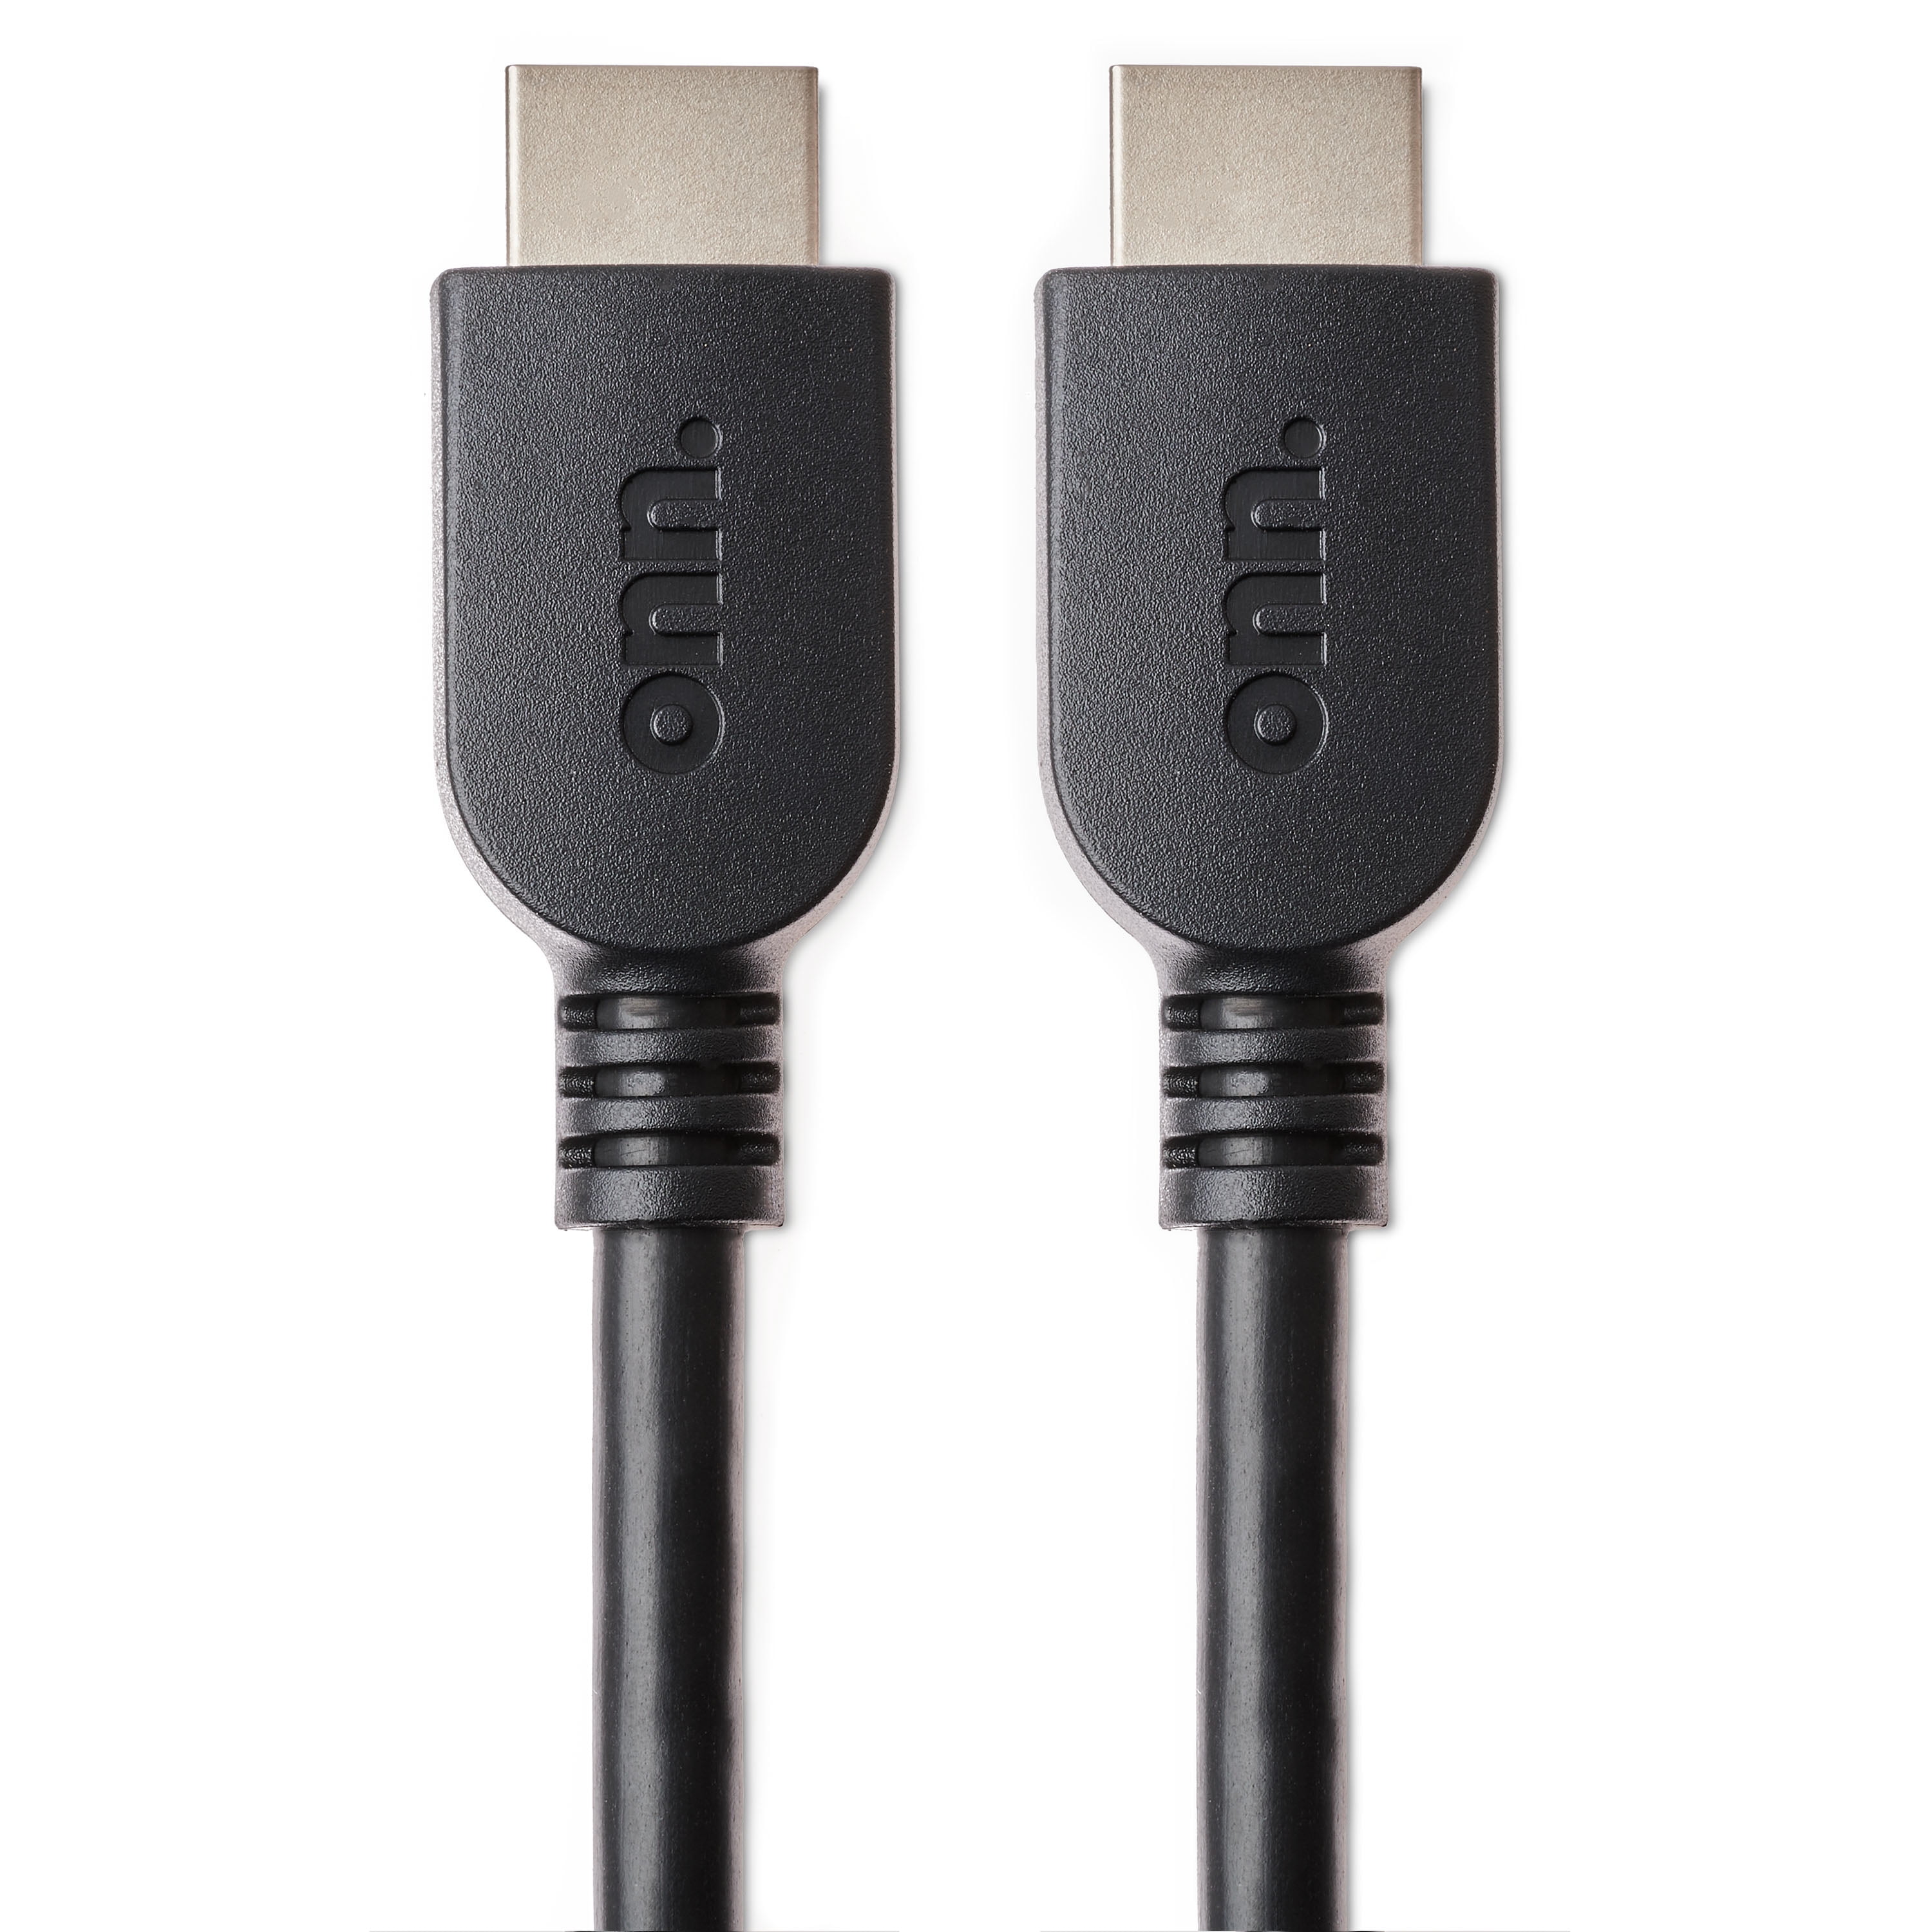 onn. 6 USB-C to HDMI Adapter, Black, 4K Resolution, Gaming Setup